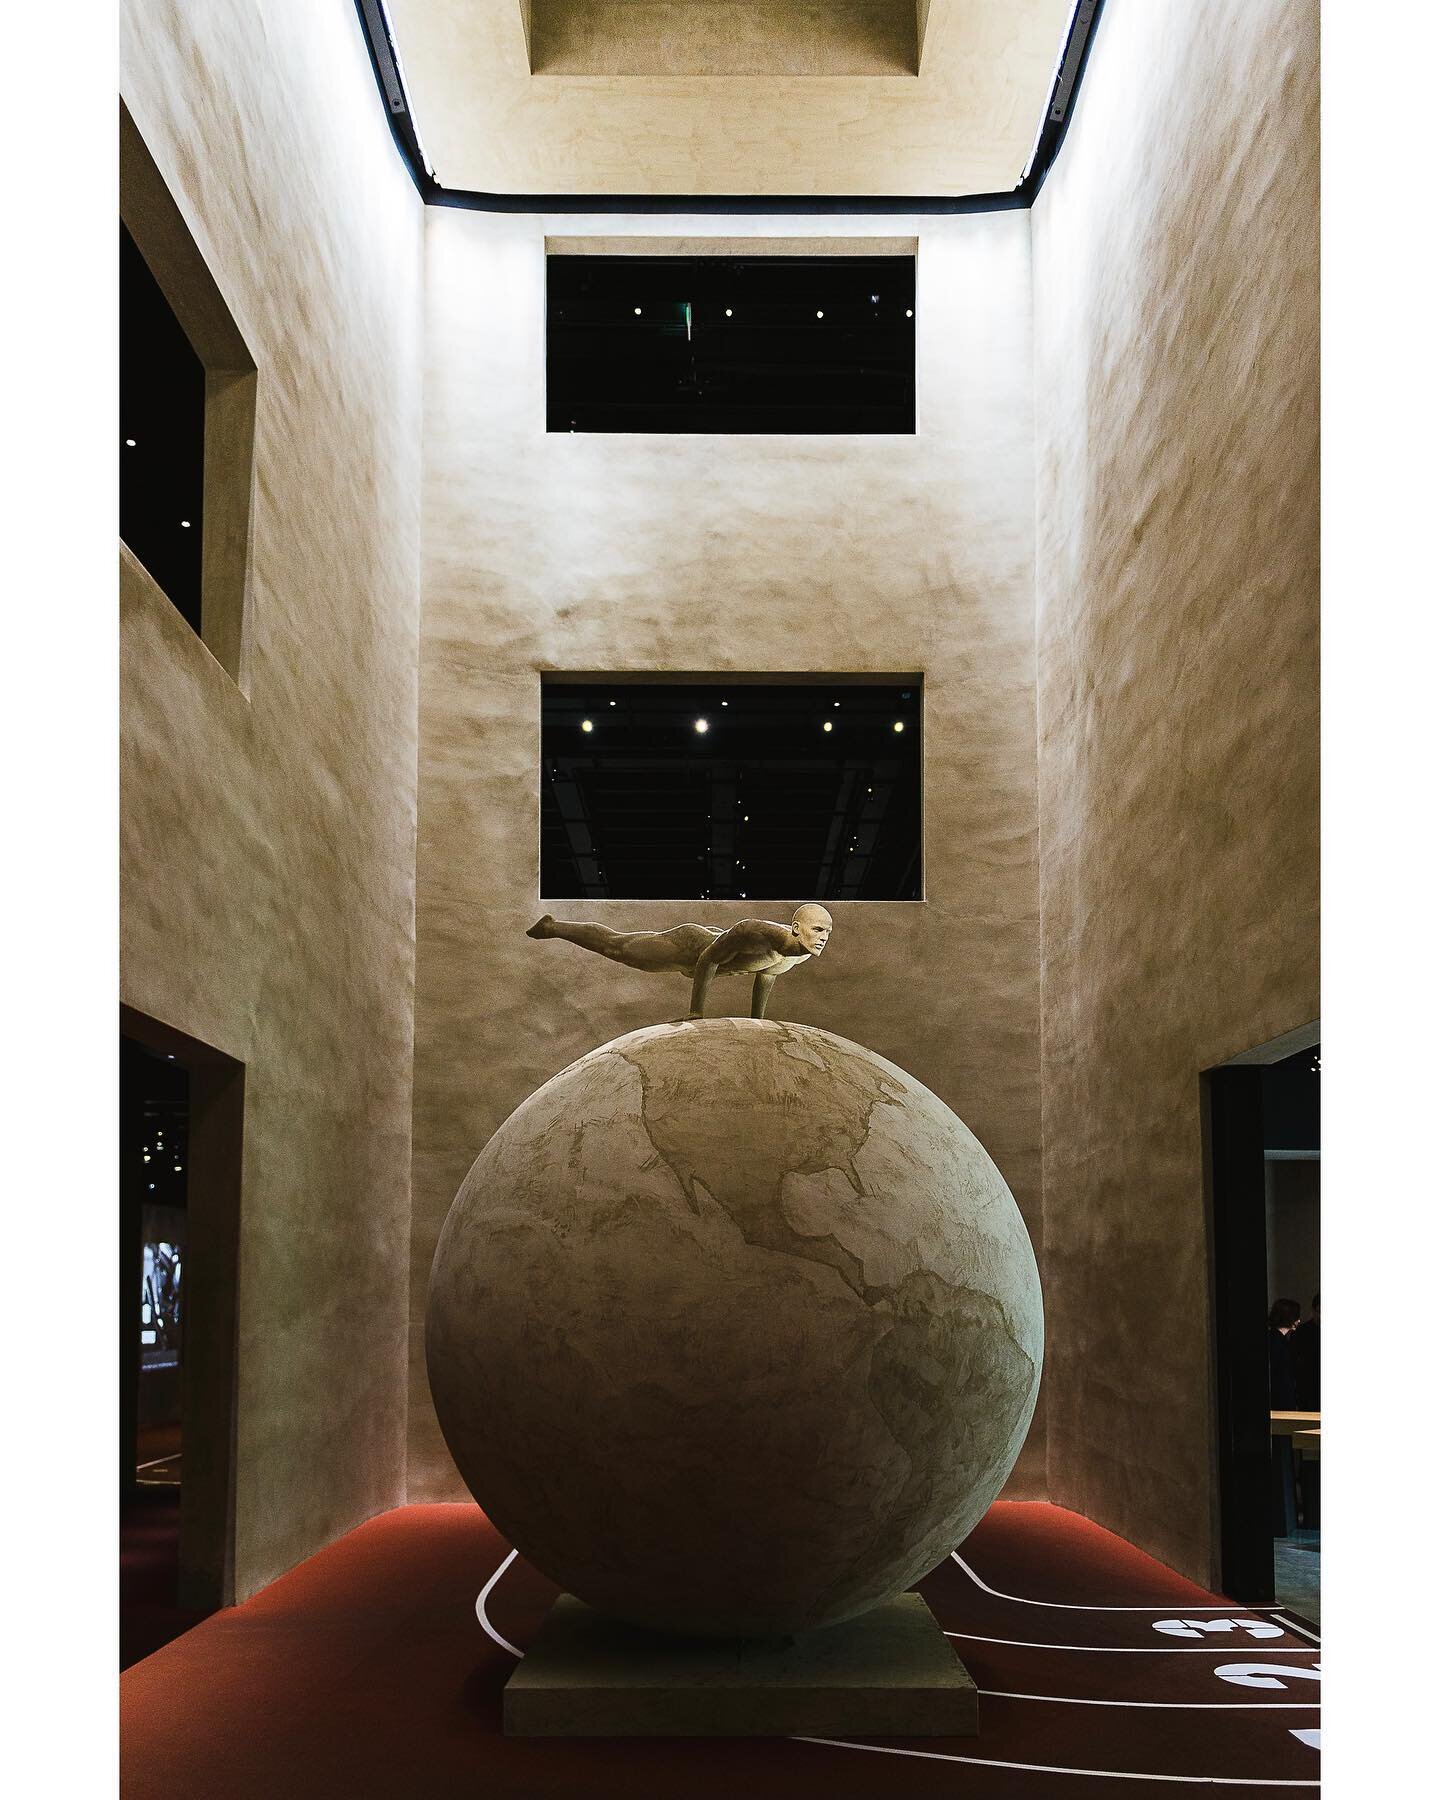 Armani Silos - Milan, Italy - 2017

#nilevinczphotography #nikonnofilter #yourshotphotographer #travelphotography #silos #amazingplaces #greige #interiorarchitecture #photocinematica #eyeshotmag #madewithlightroom #europe_gallery #archidaily #chasing